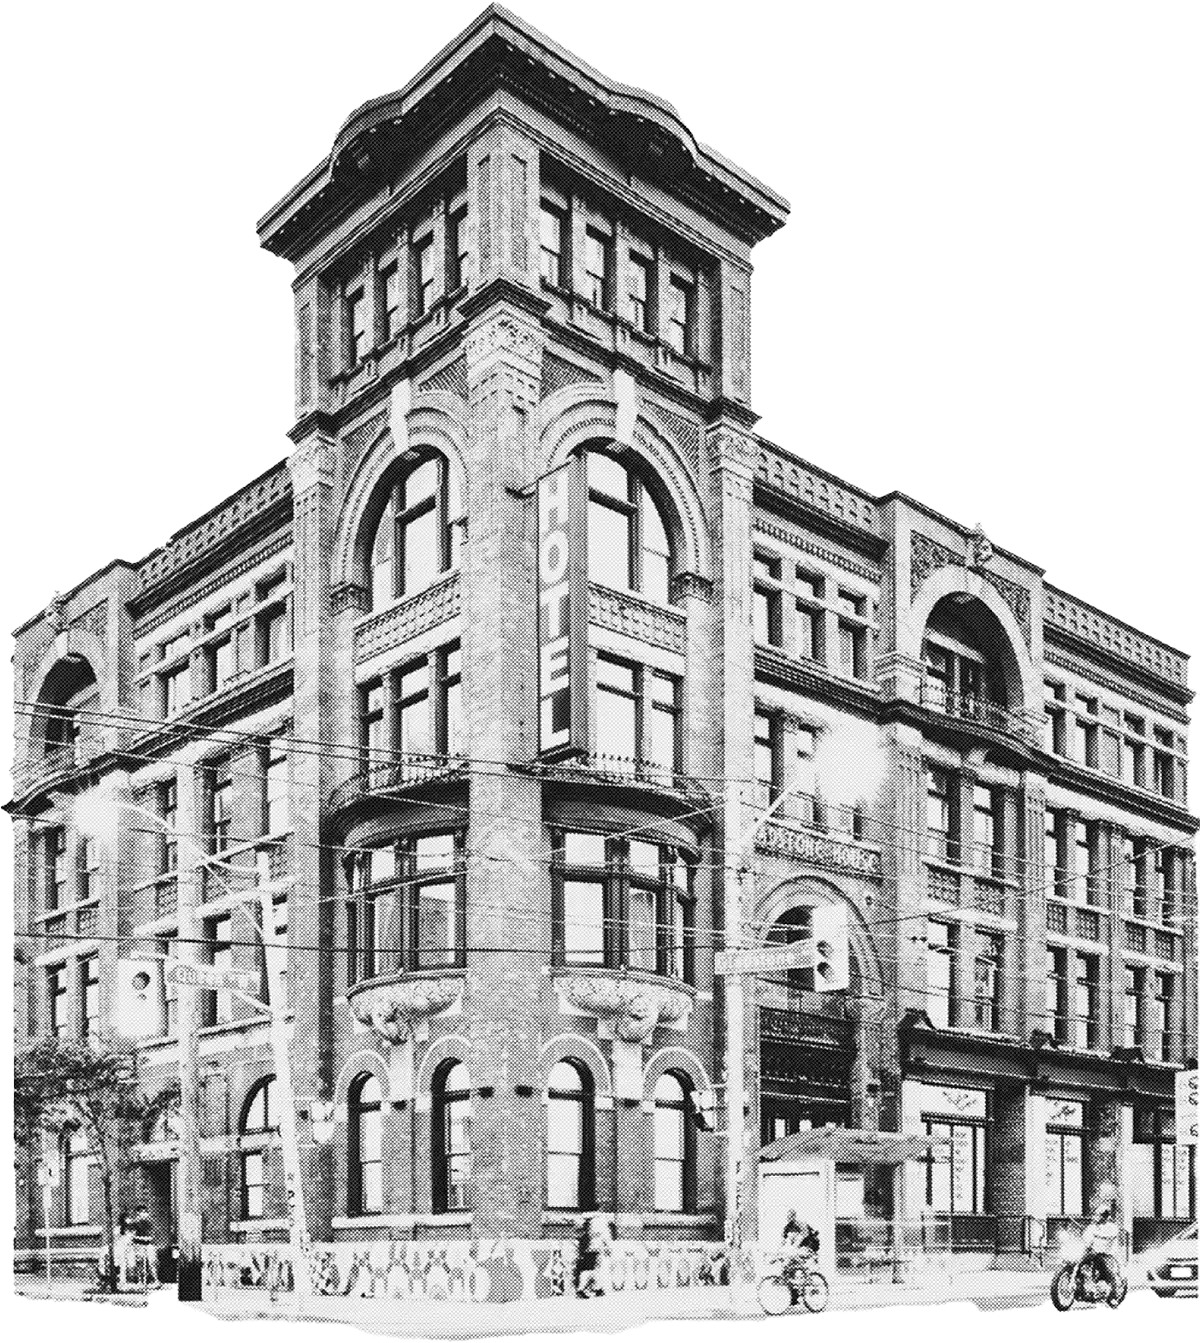 Black & White halftone style photo of Gladstone House building exterior